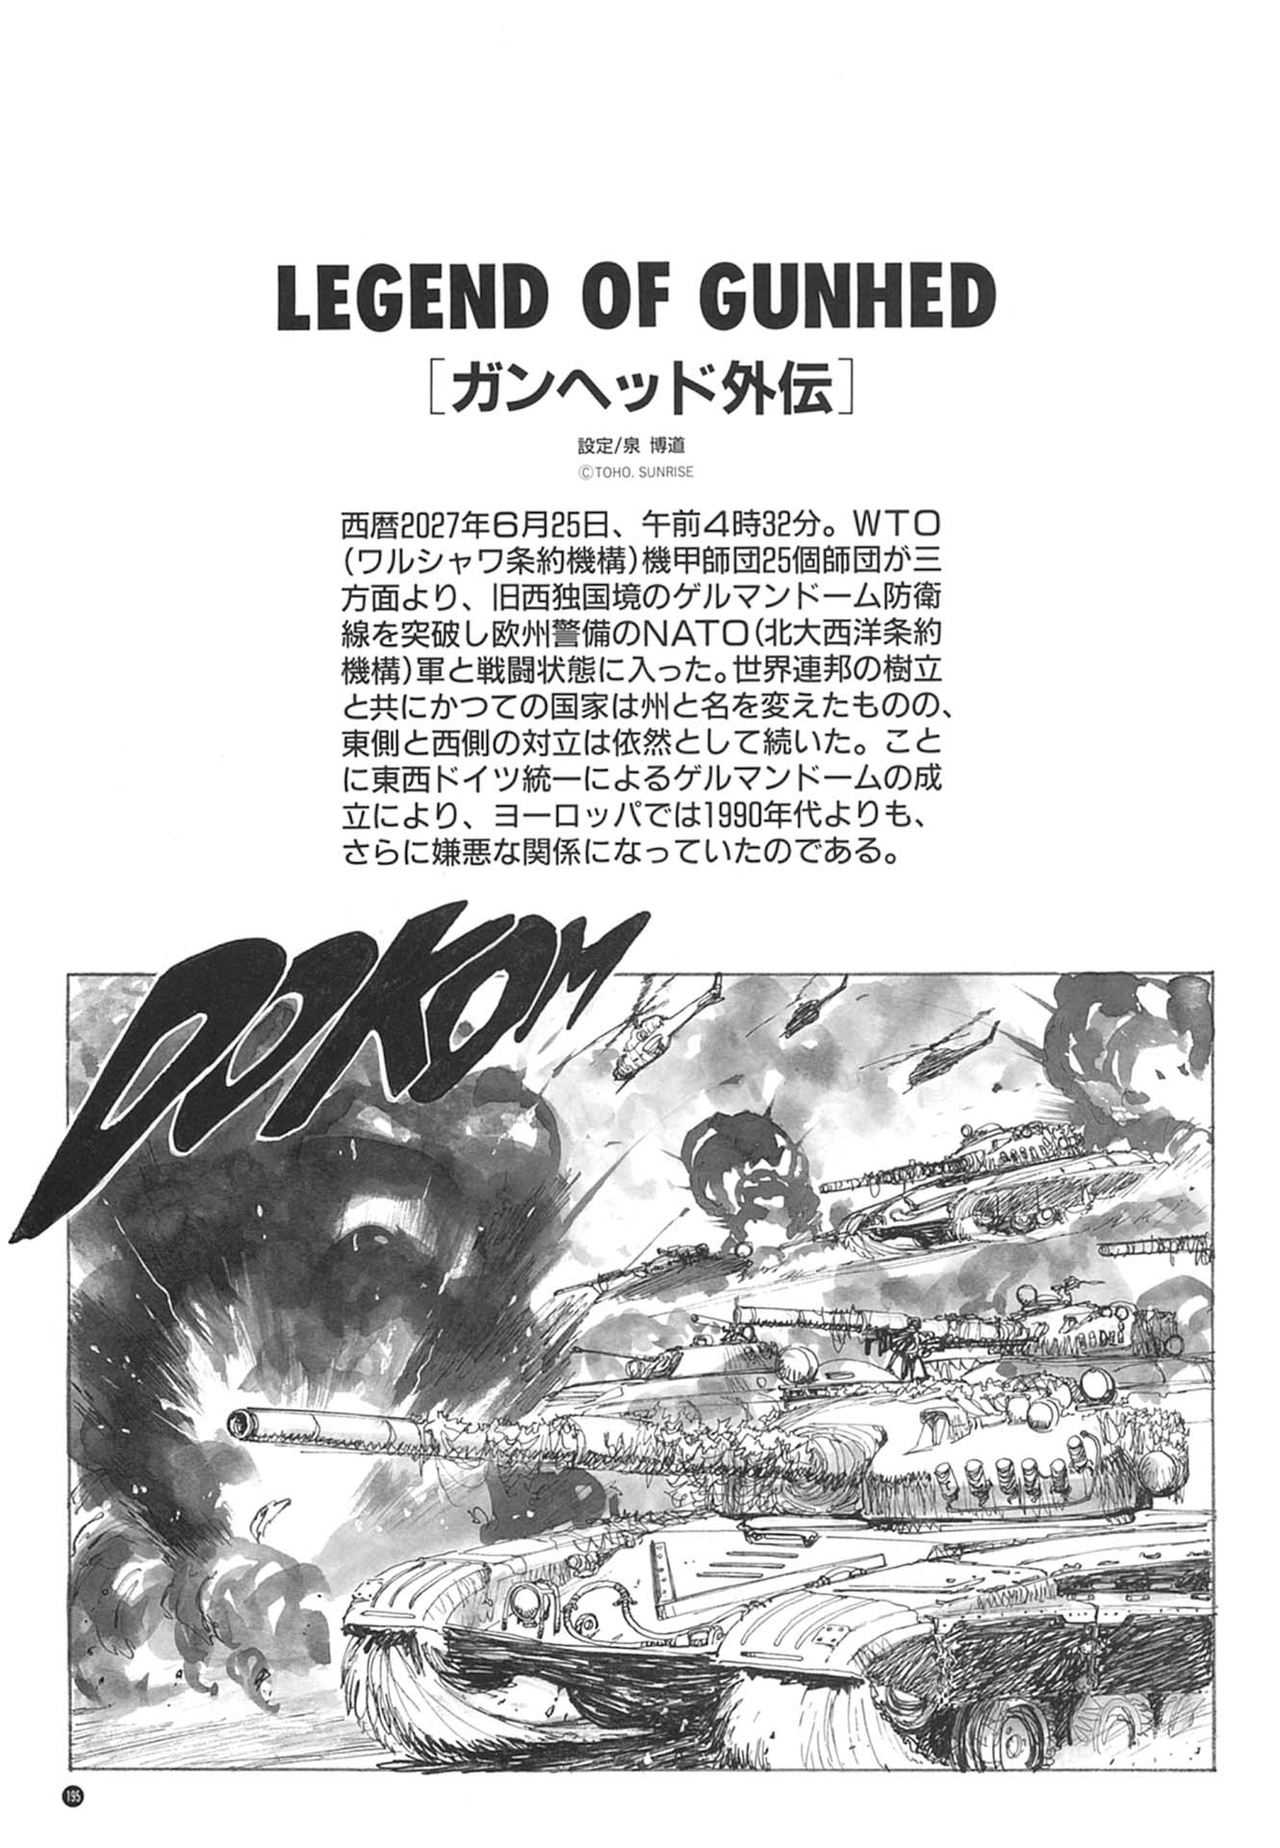 [Kazuhisa Kondo] Kazuhisa Kondo 2D & 3D Works - Go Ahead - From Mobile Suit Gundam to Original Mechanism 194